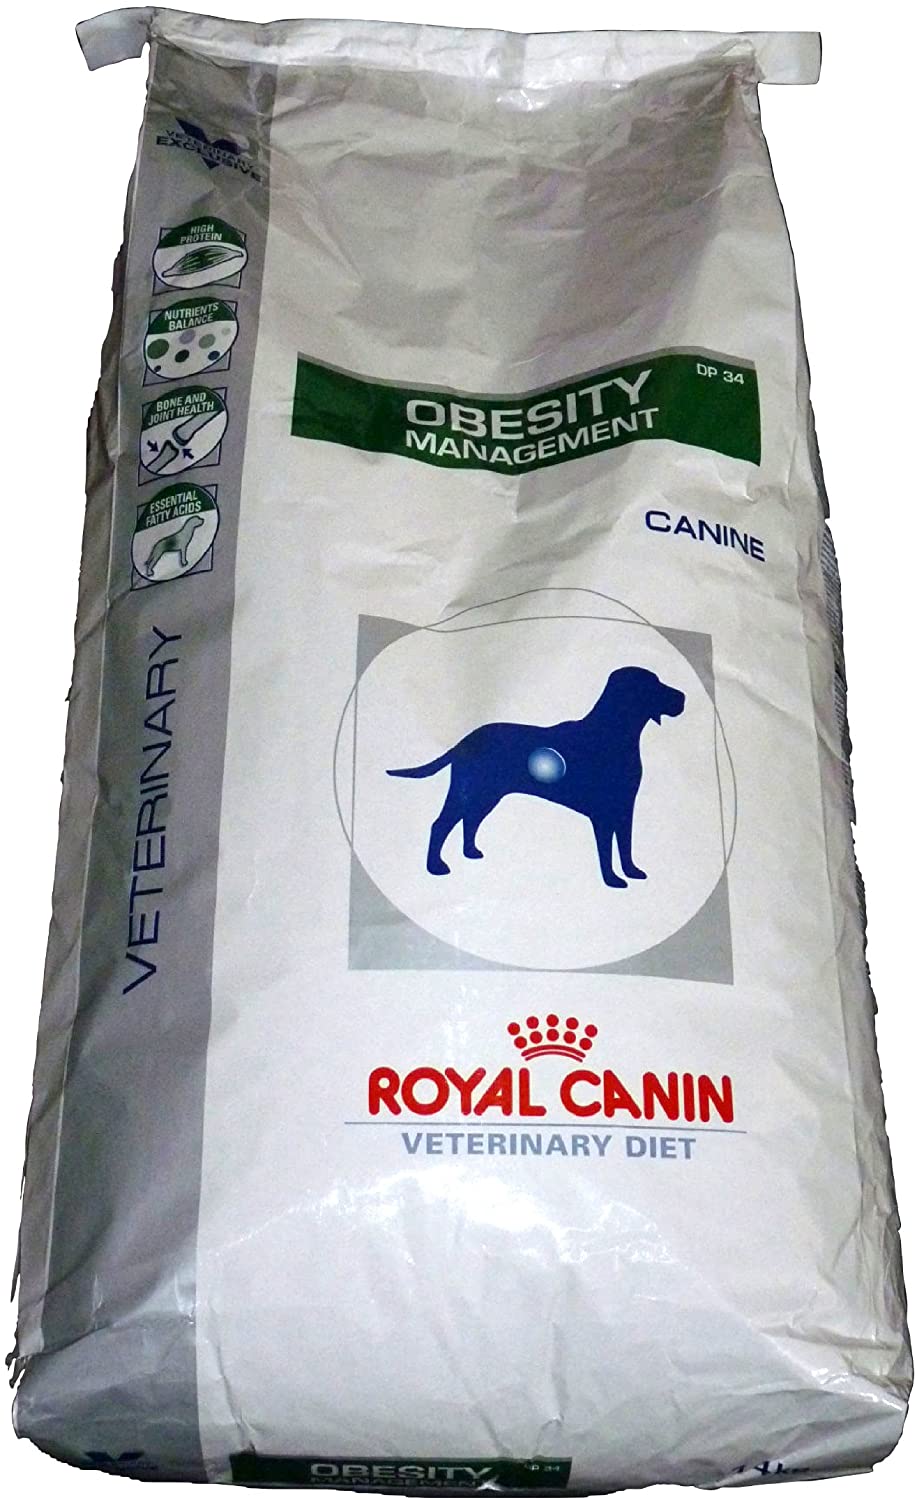  Royal Canin C-11235 Diet Obesity Dp34 - 1.5 Kg 